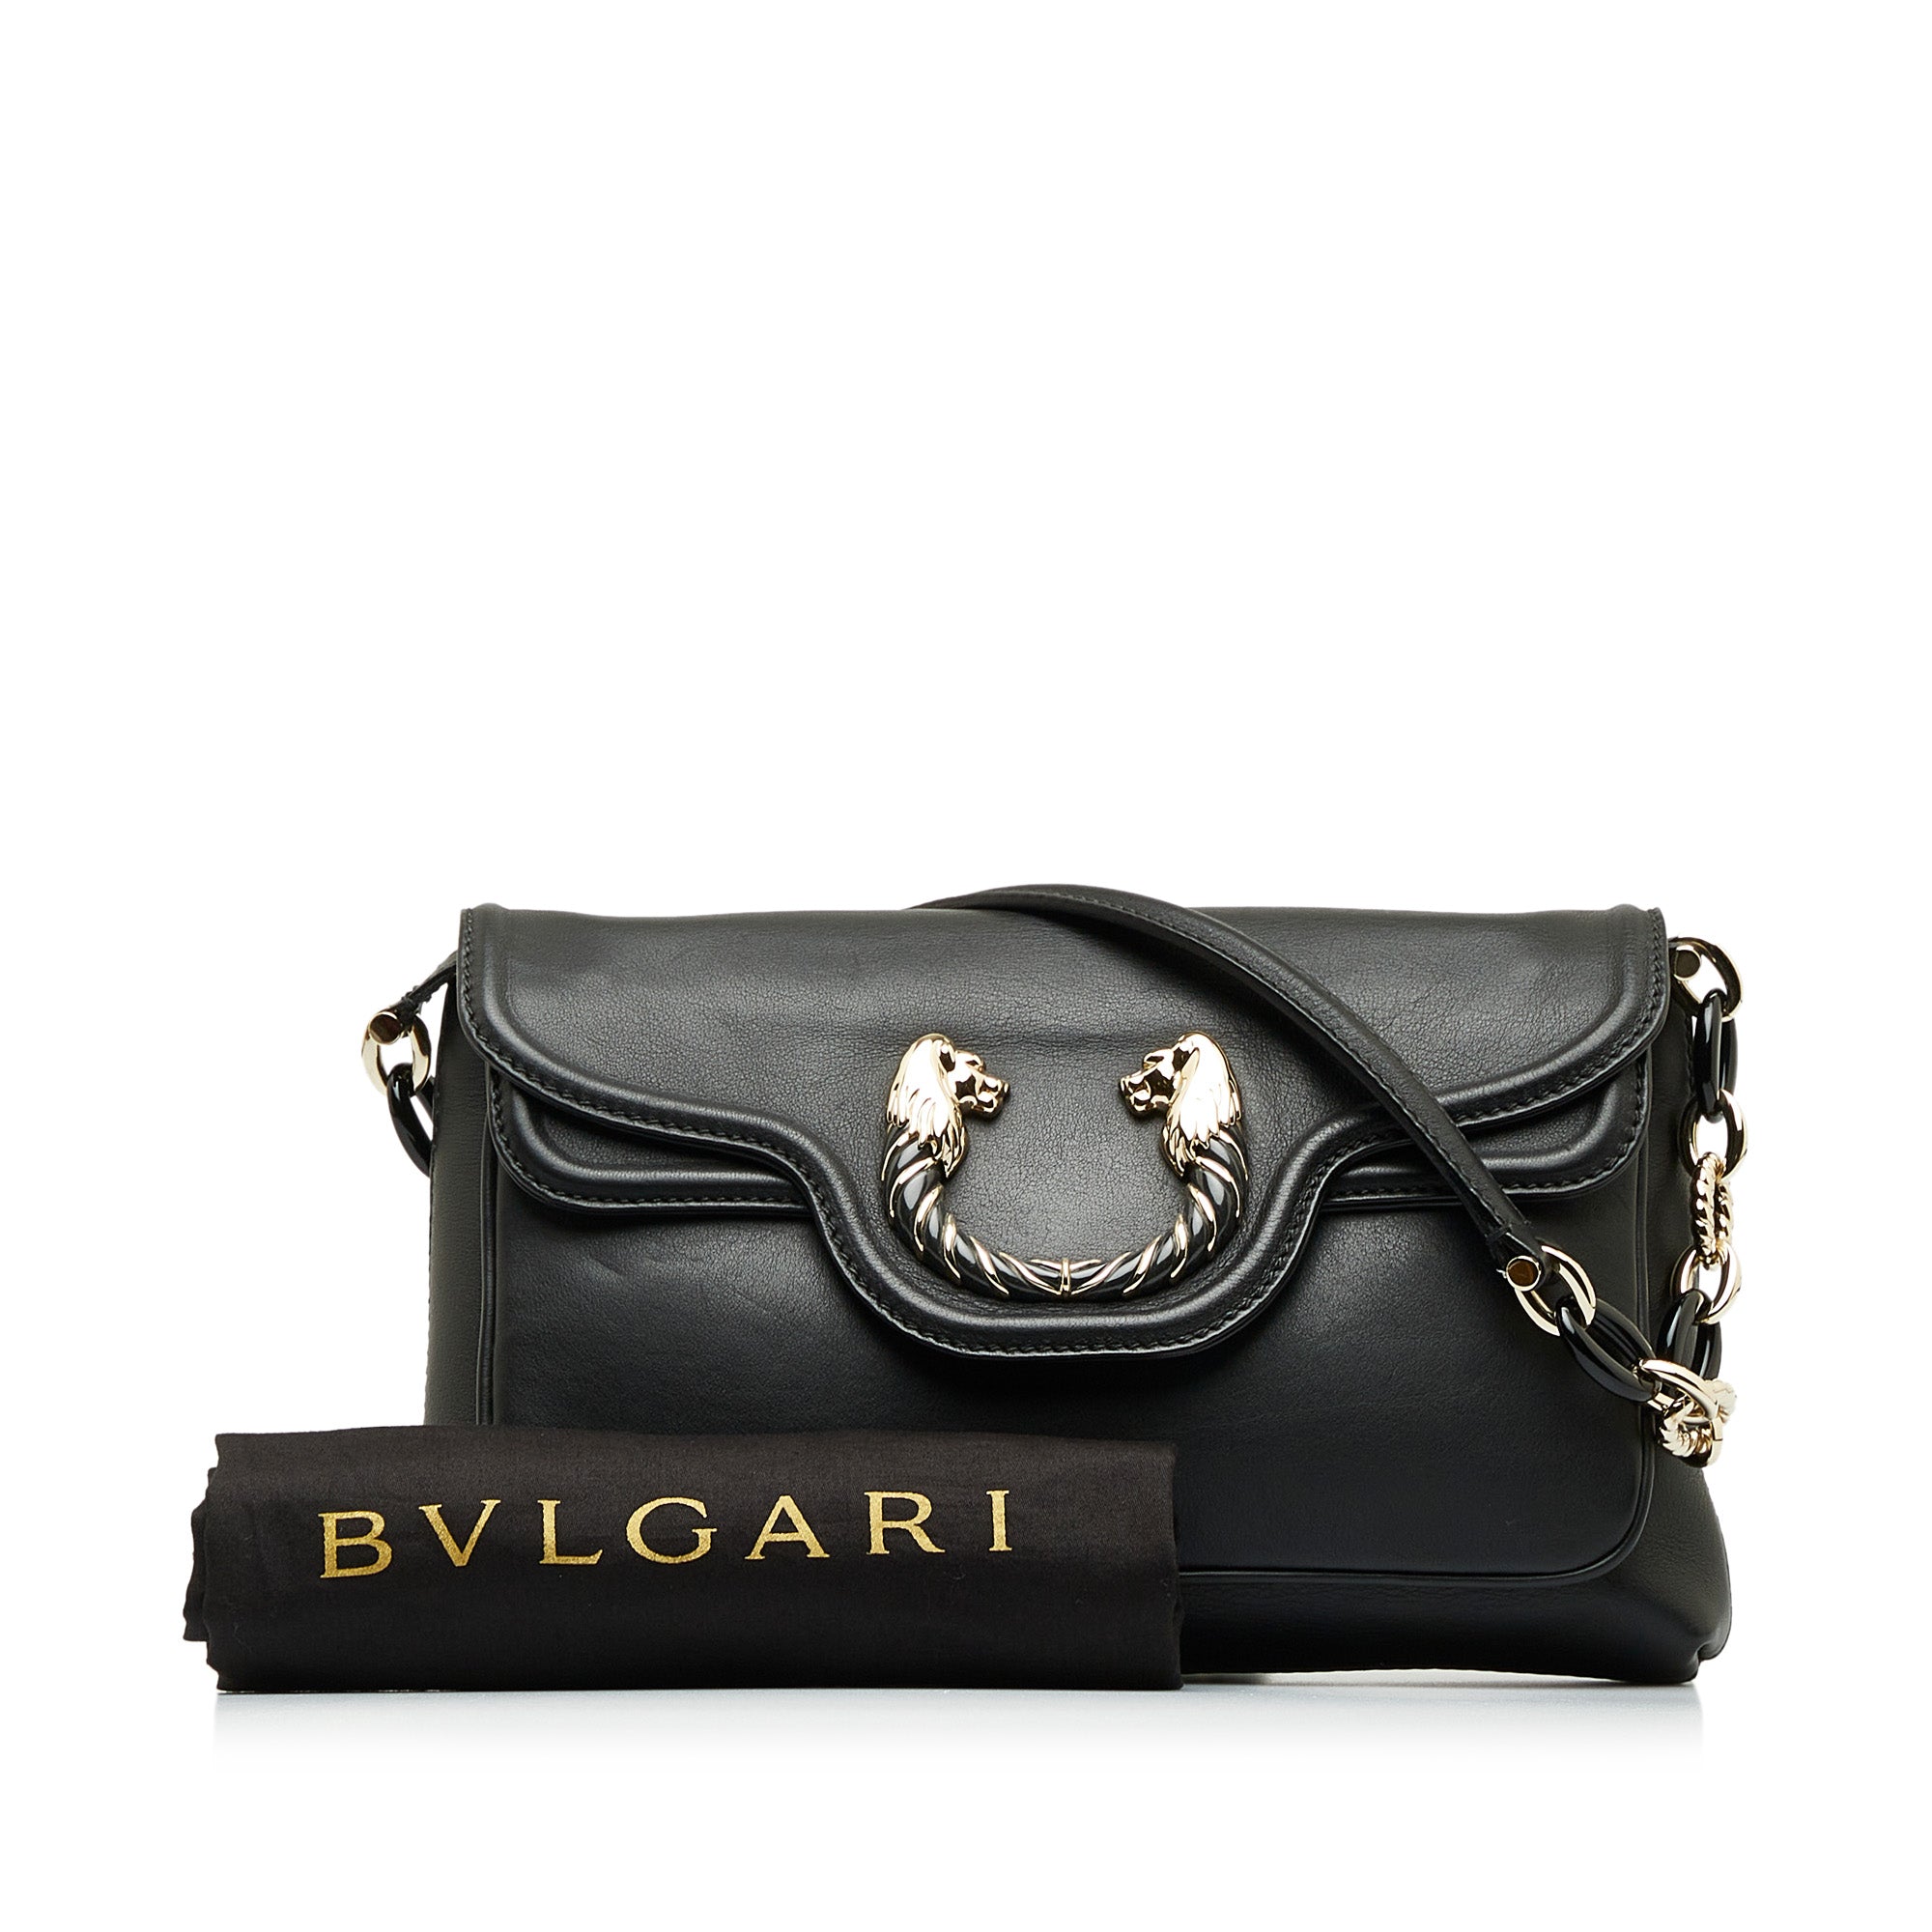 Bvlgari - Authenticated Serpenti Handbag - Leather Black Plain for Women, Never Worn